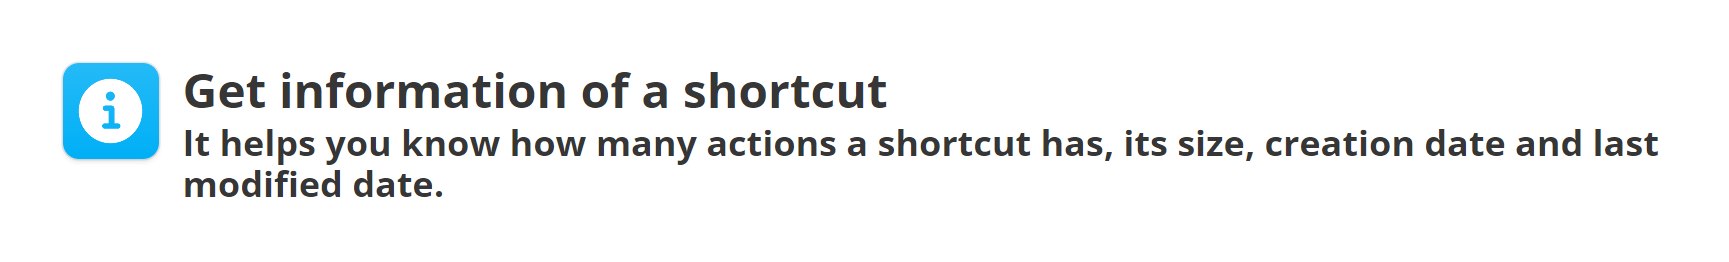 get-information-shortcut